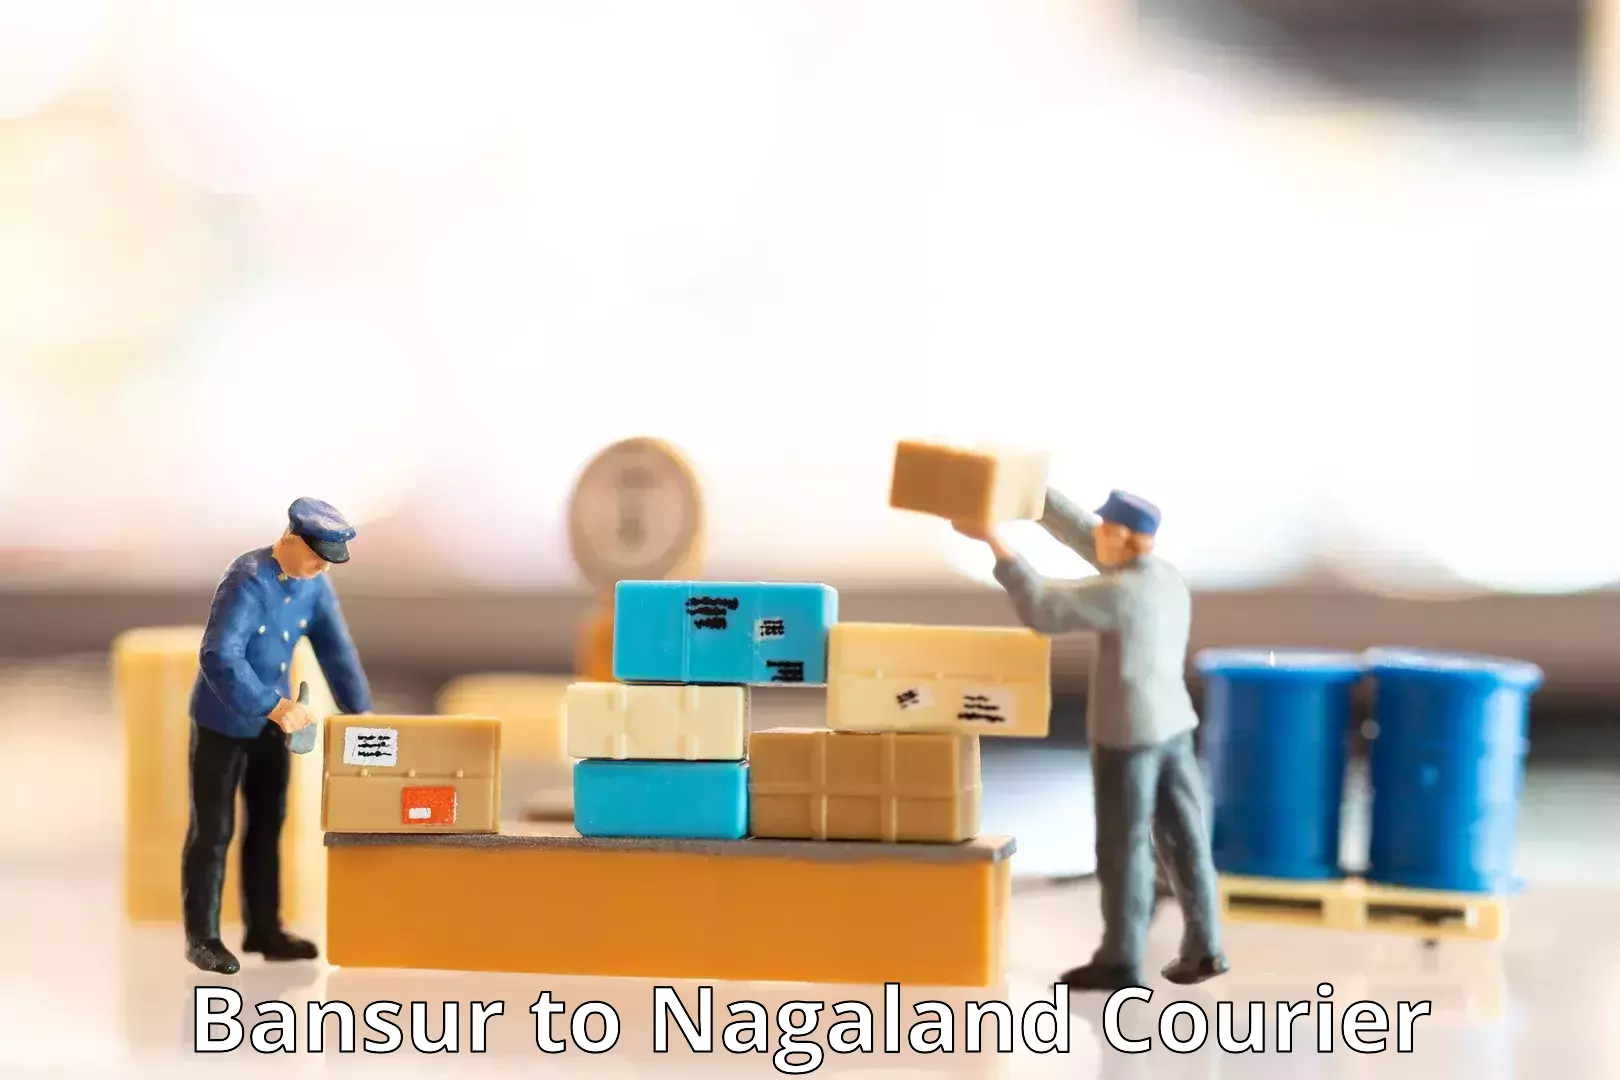 Courier service partnerships Bansur to Nagaland